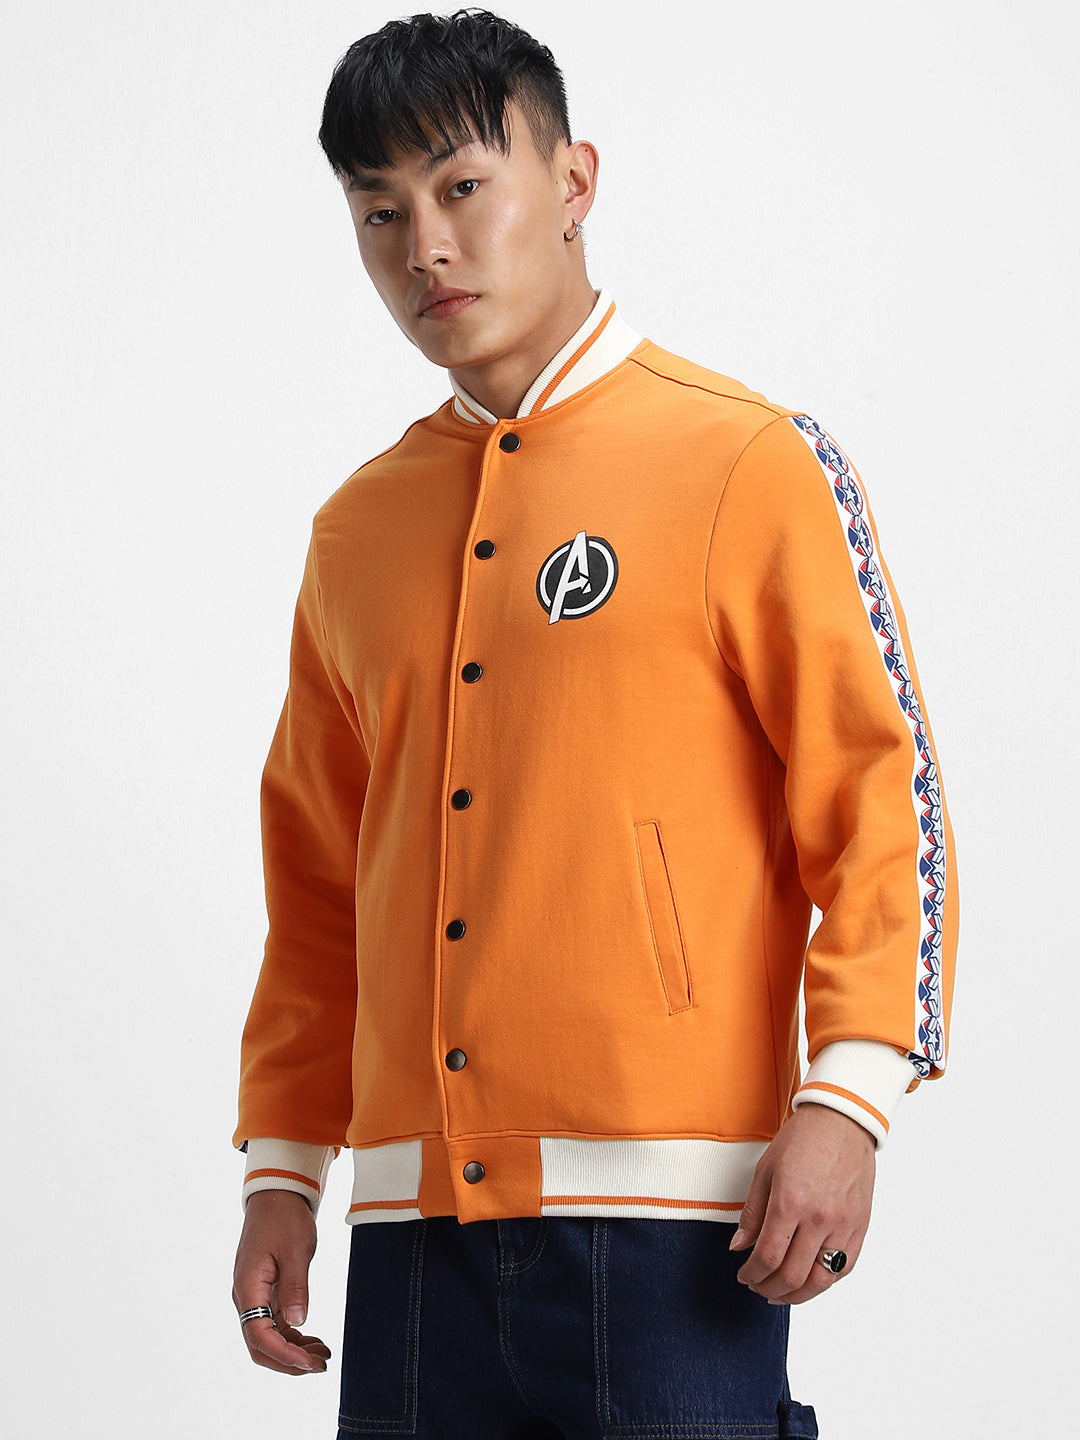 Discover the Latest Collection of Stylish Orange Men's Jackets Veirdo